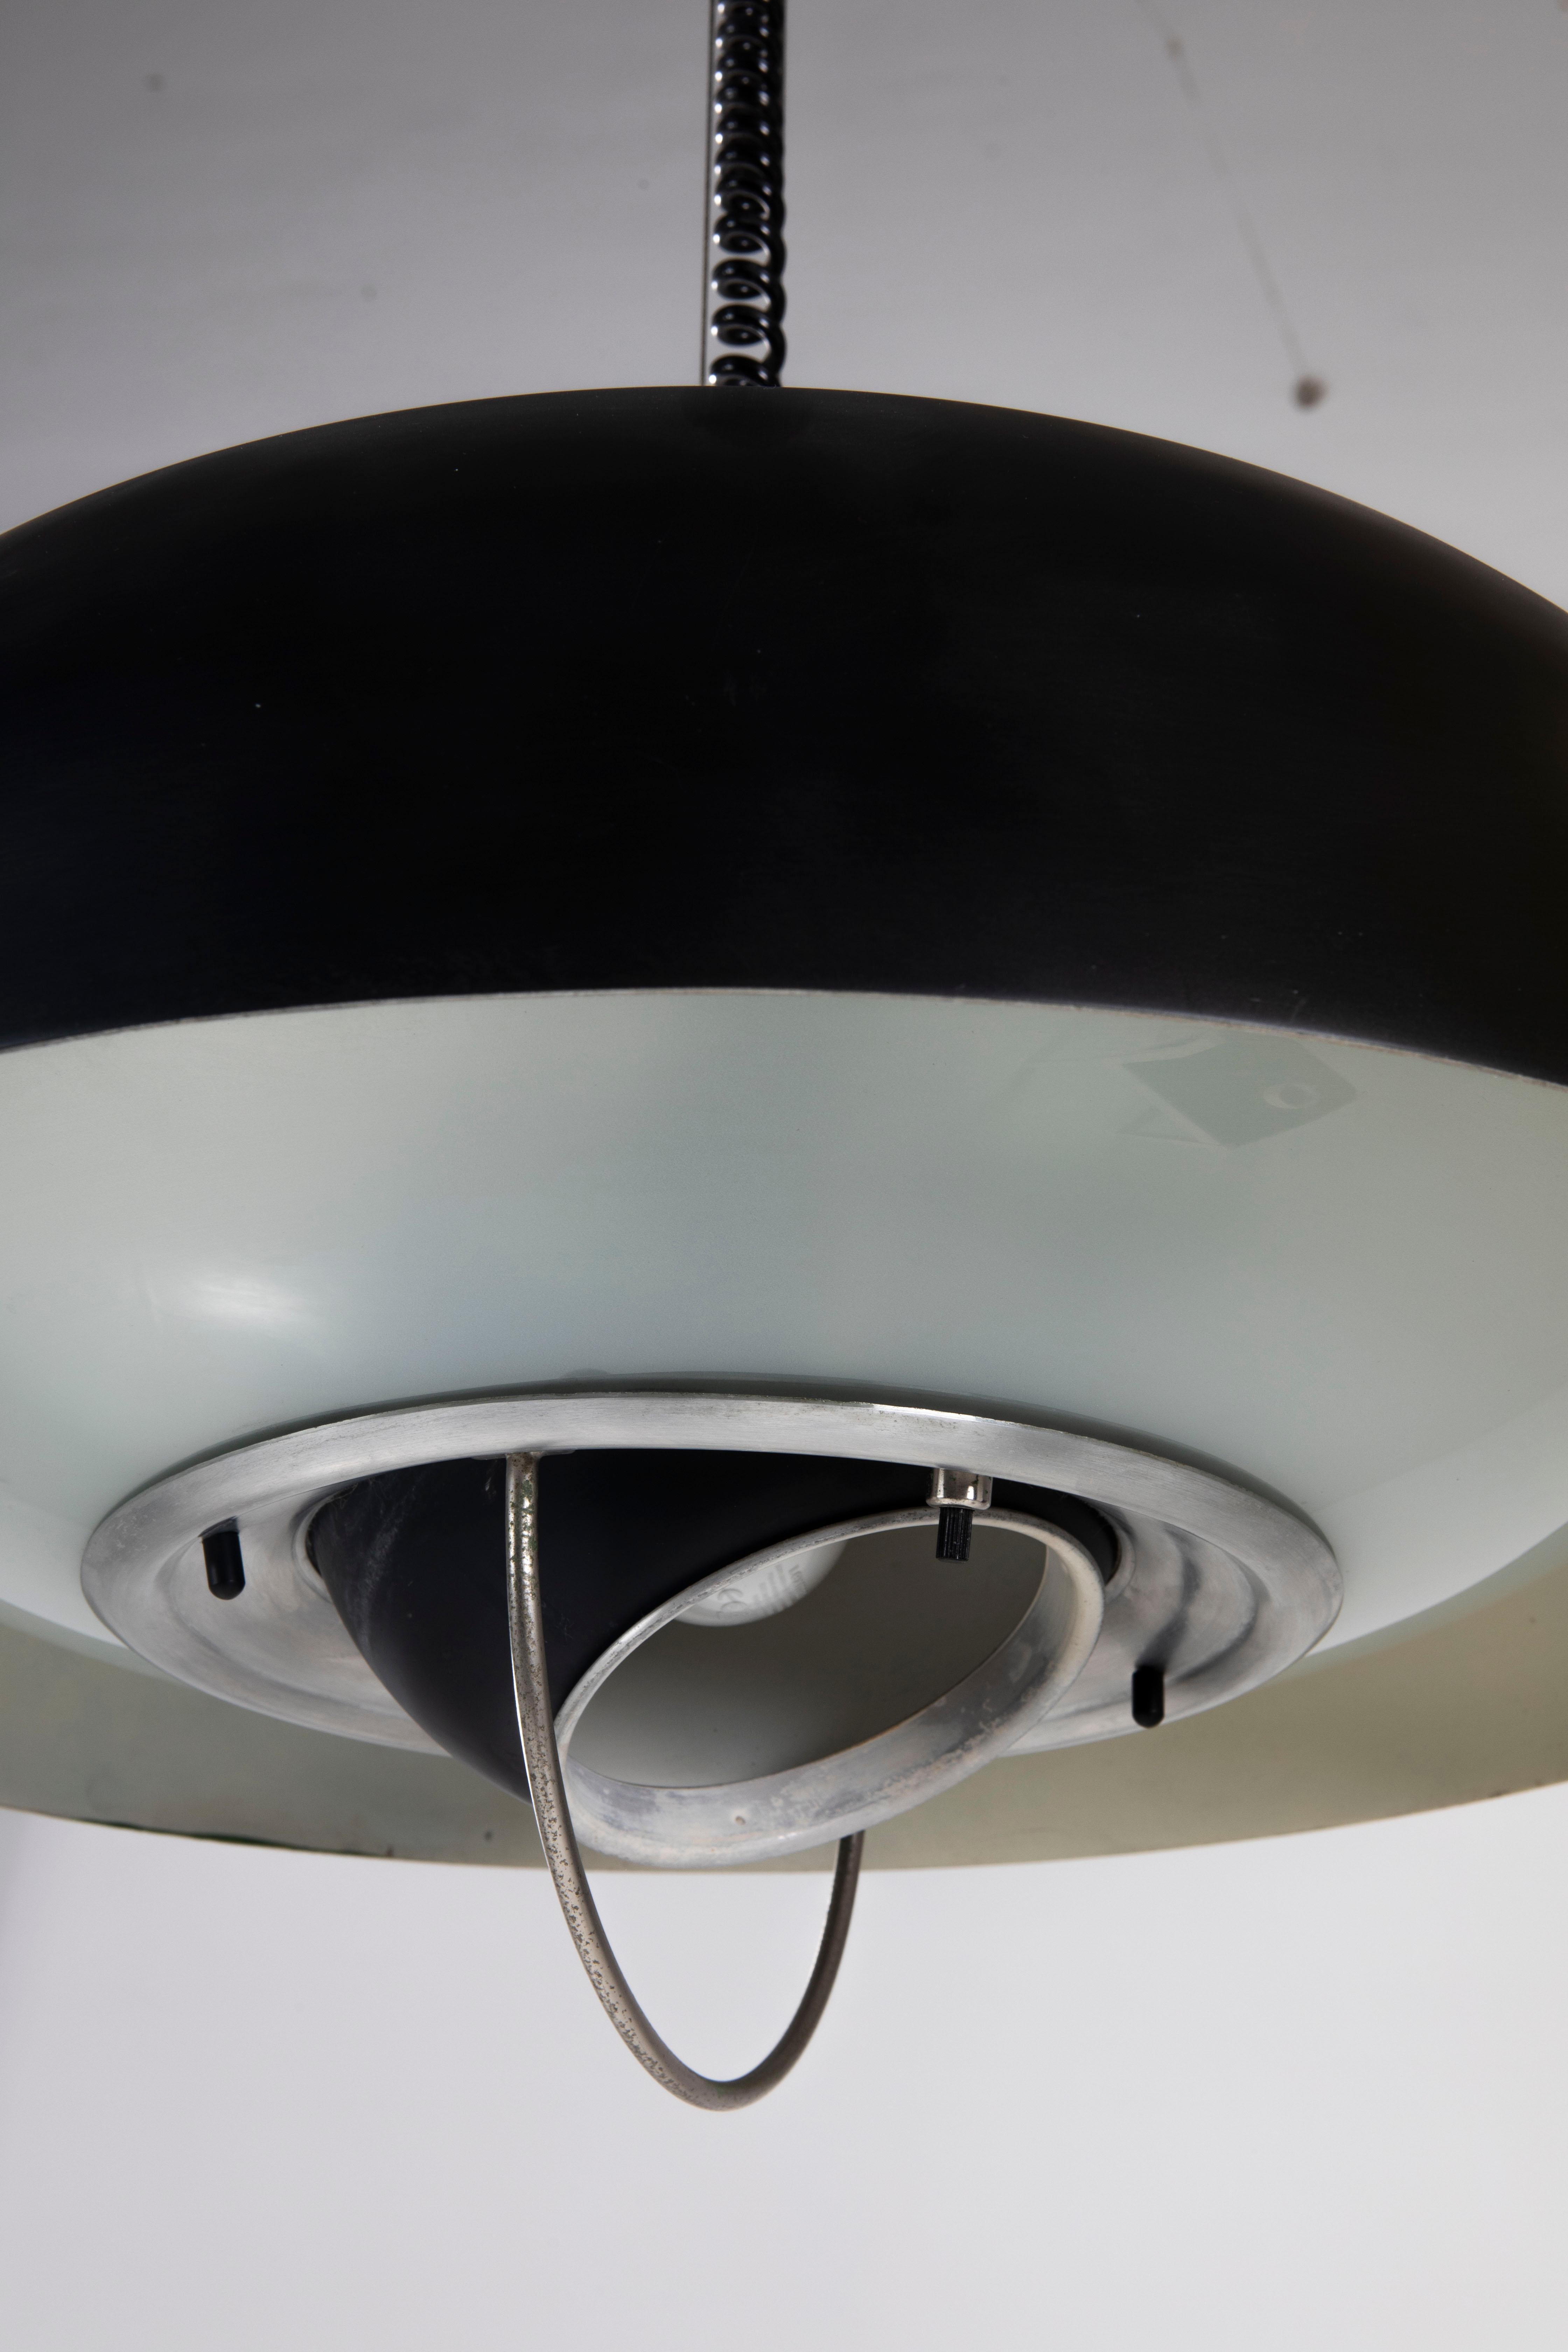 Oscar Torlasco Pair of adjustable chandeliers for Lumi, Italian Design 1960s For Sale 5